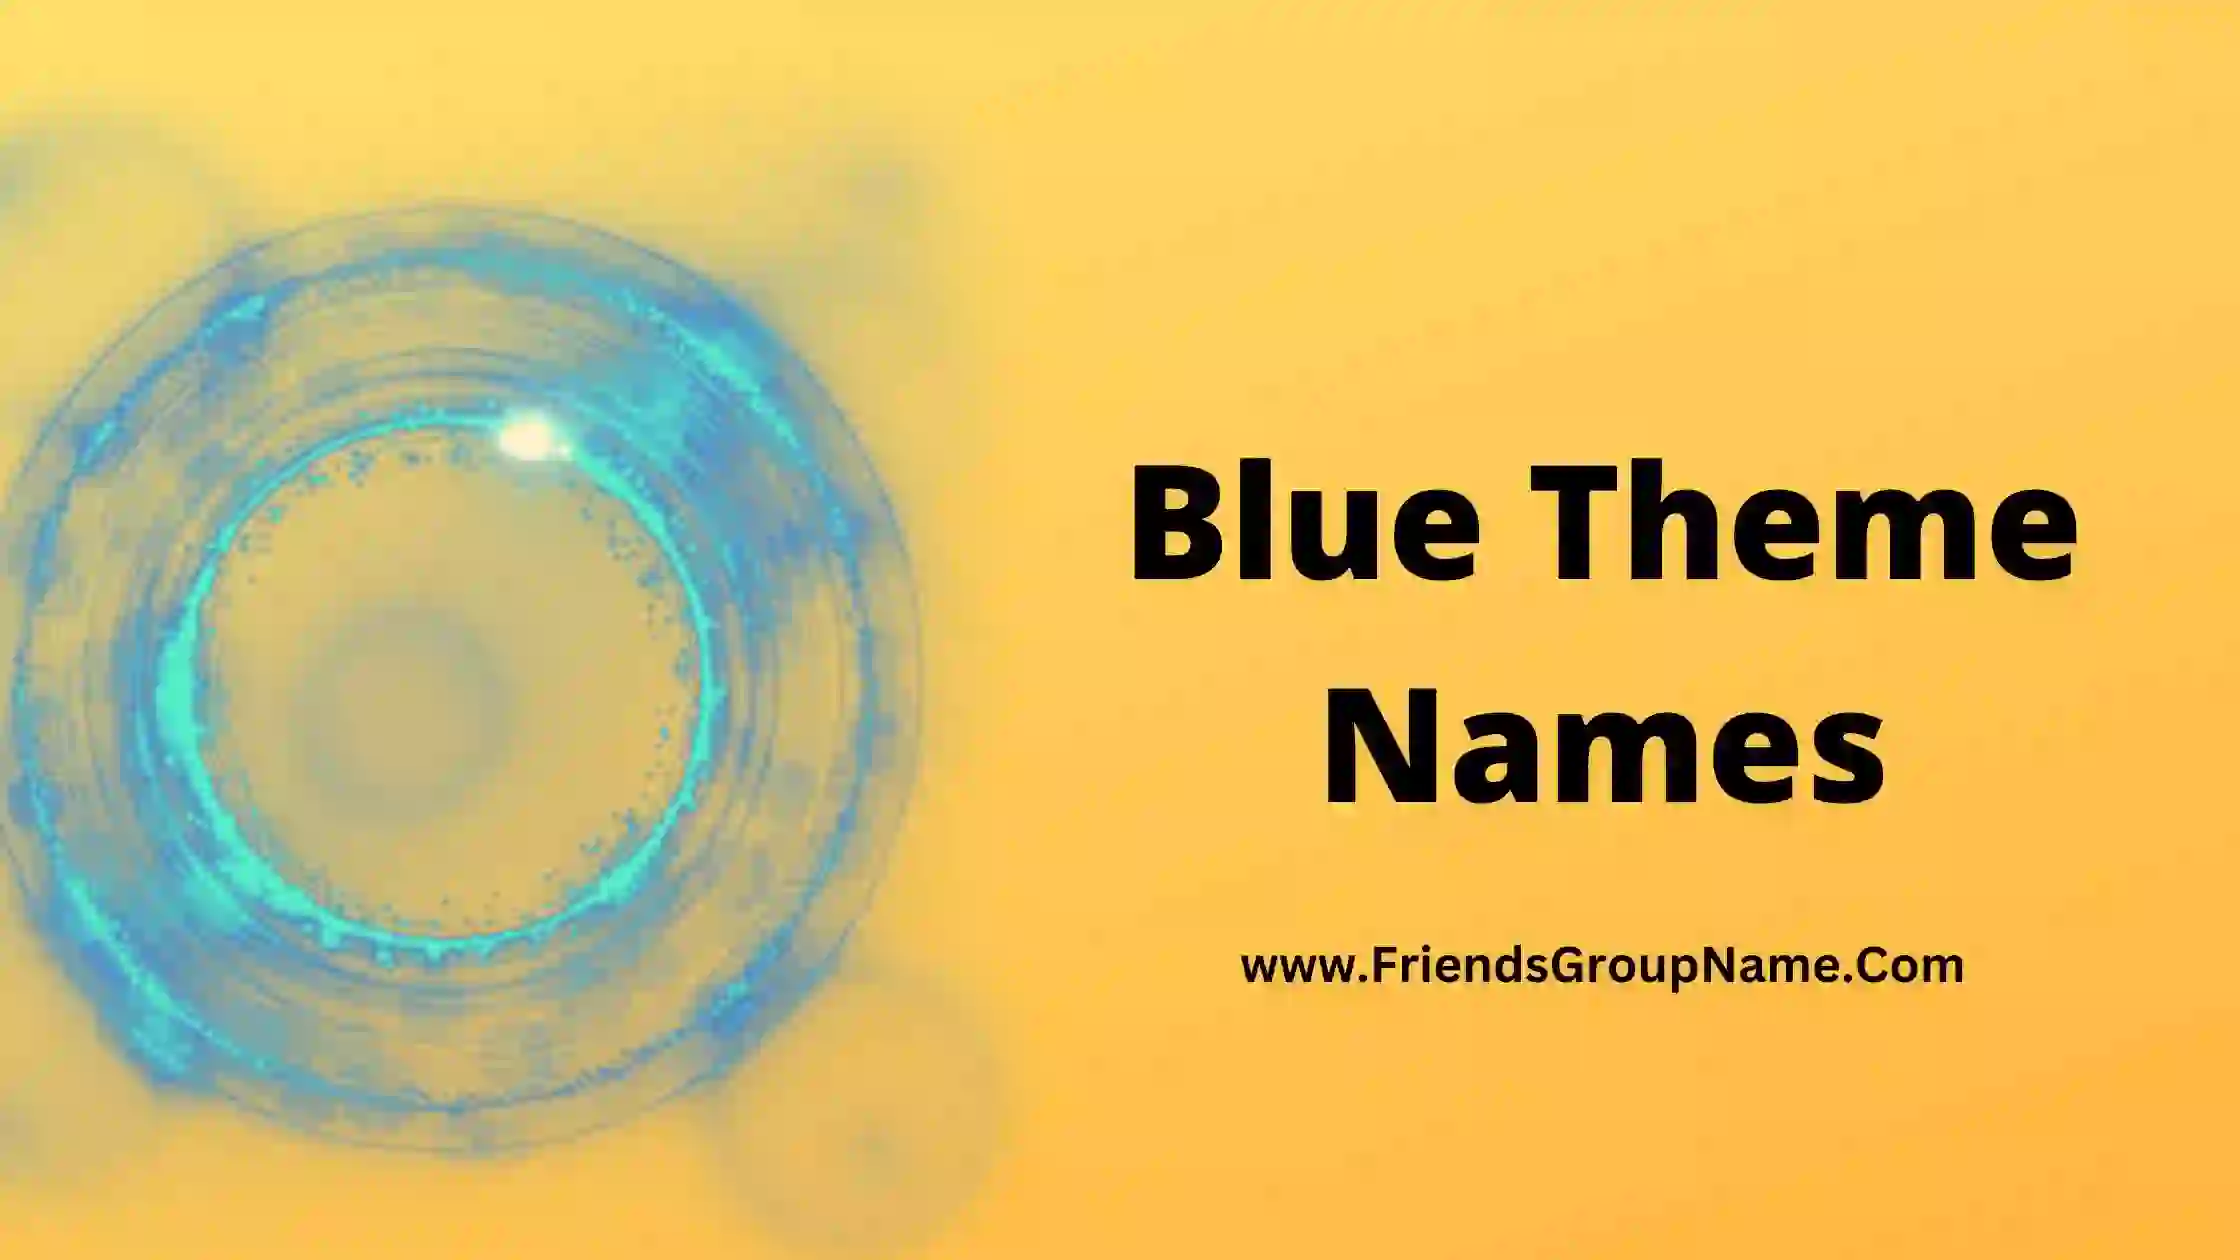 Blue Theme Names